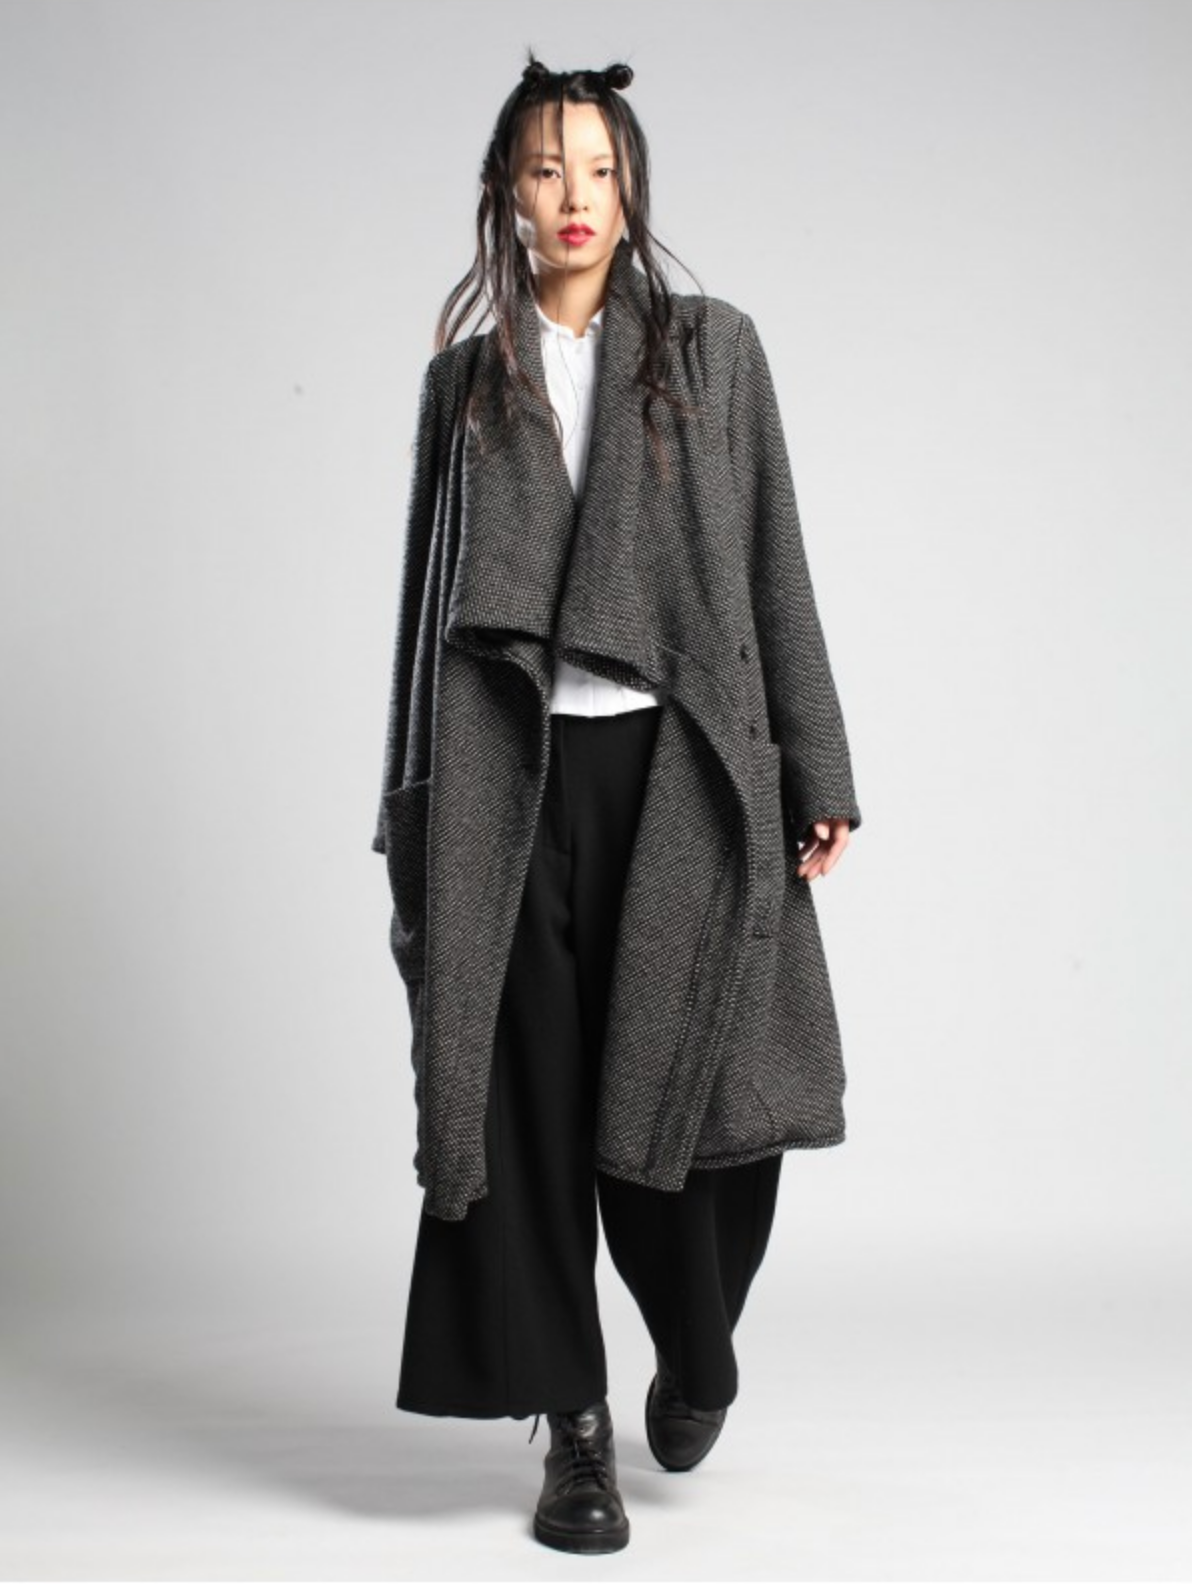 LB22-246 Black Abrigo Coat – Tiffany Treloar